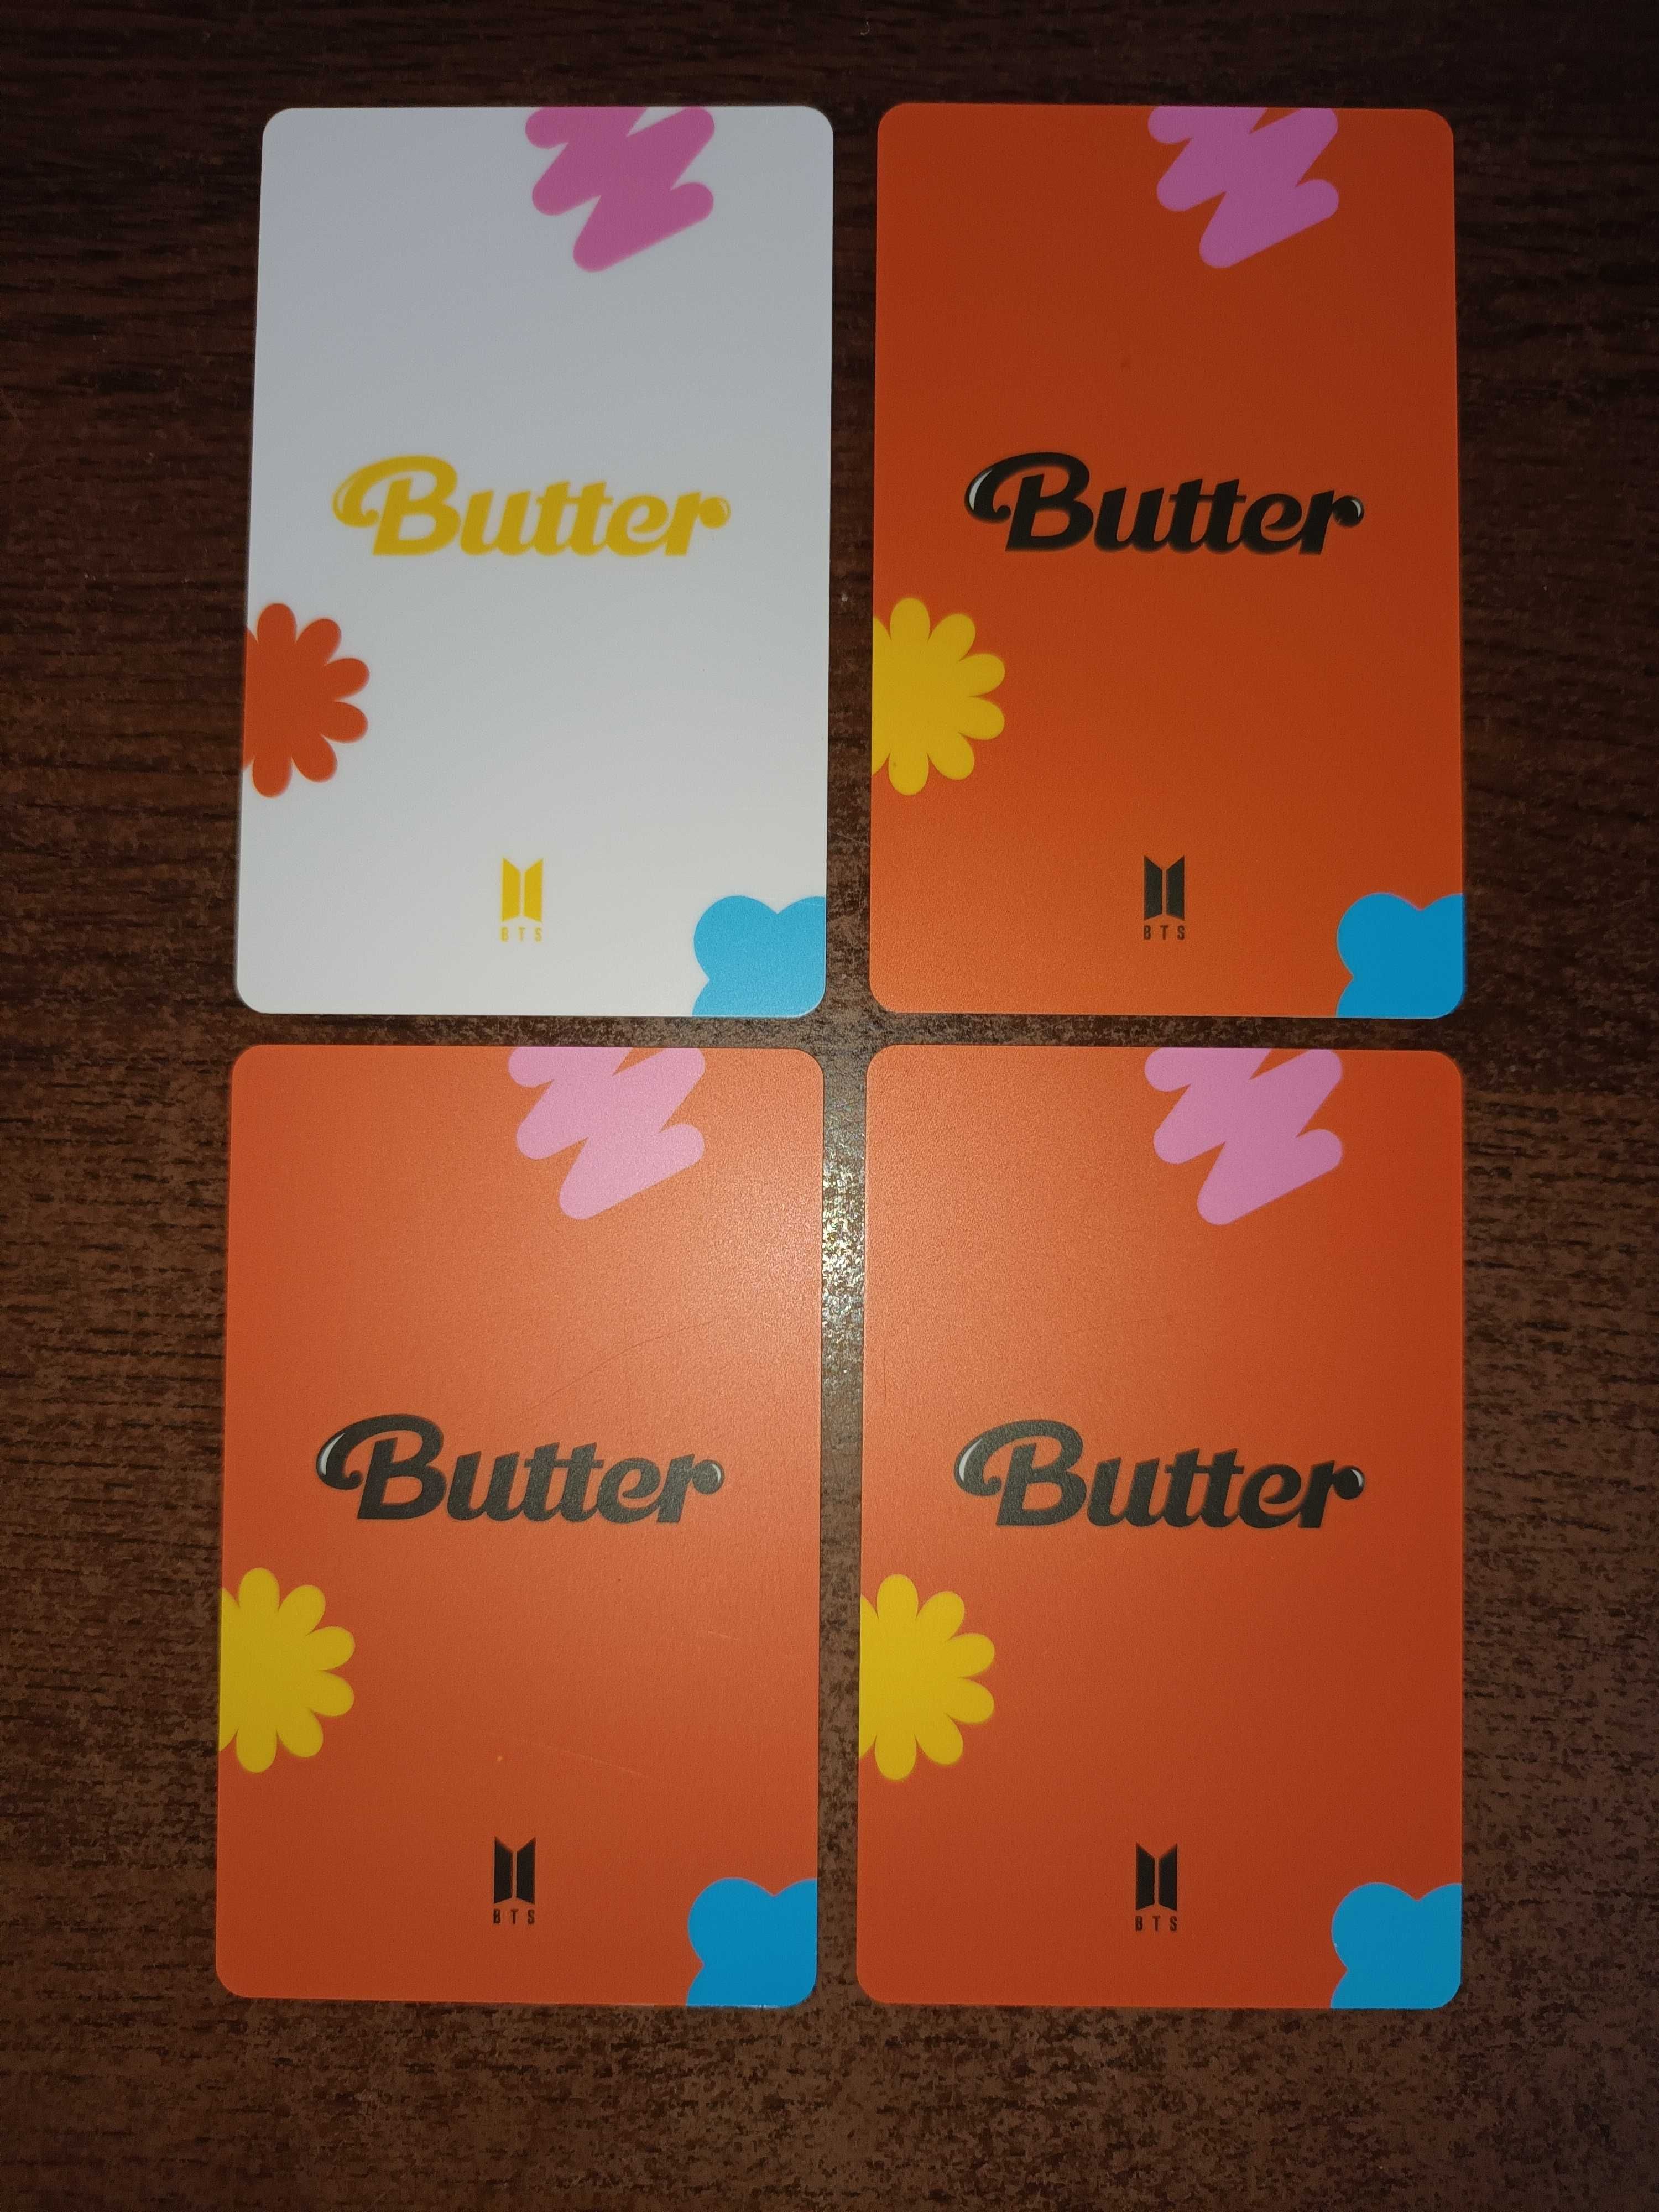 BTS Butter Official Lucky Draw cards